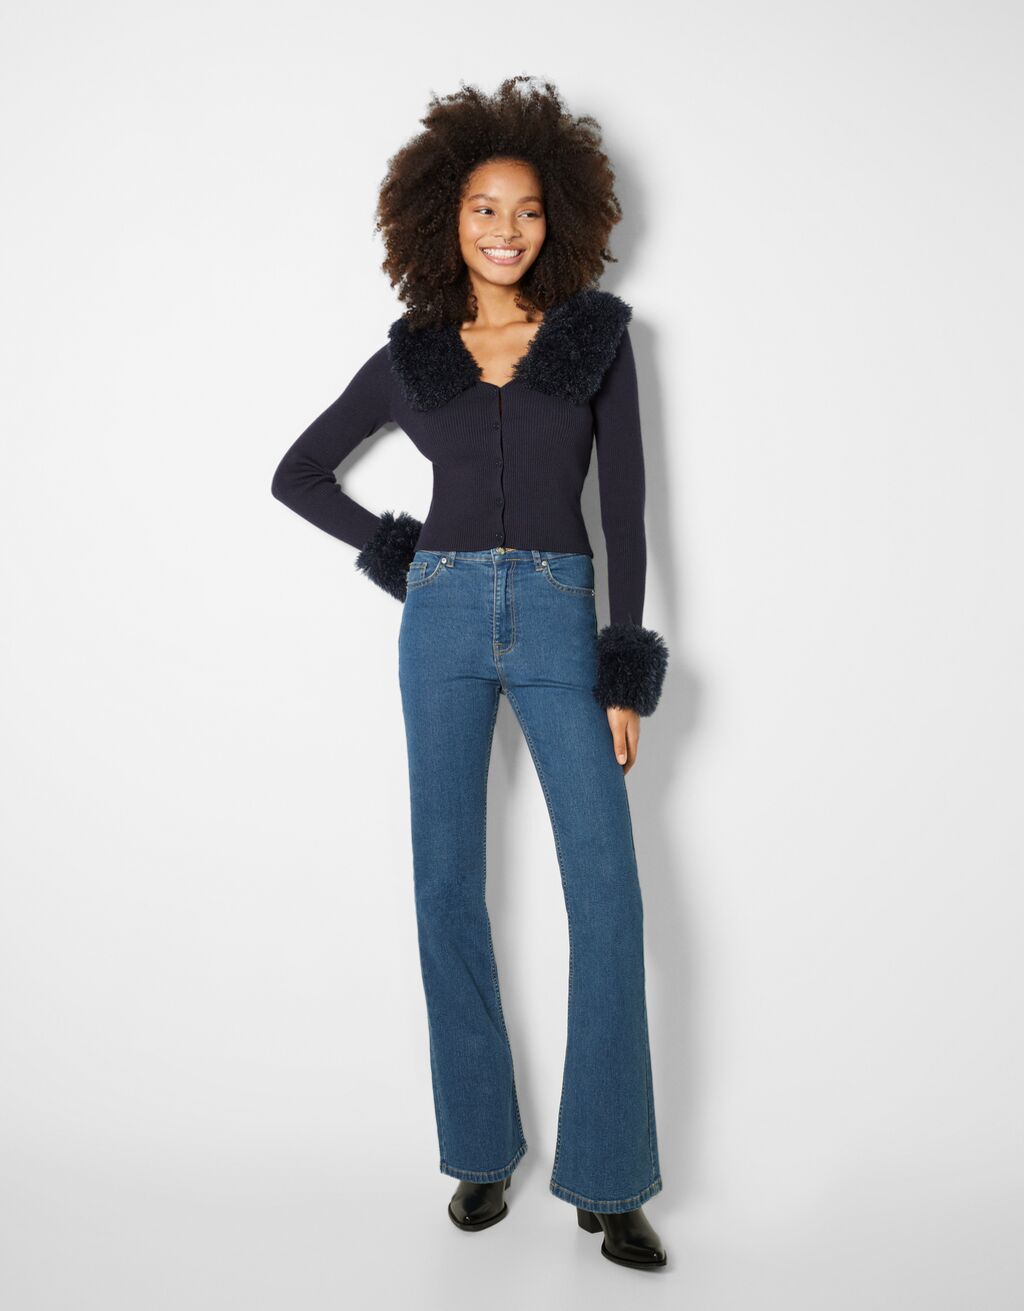 discount 98% WOMEN FASHION Jeans Basic Bershka shorts jeans Navy Blue 34                  EU 